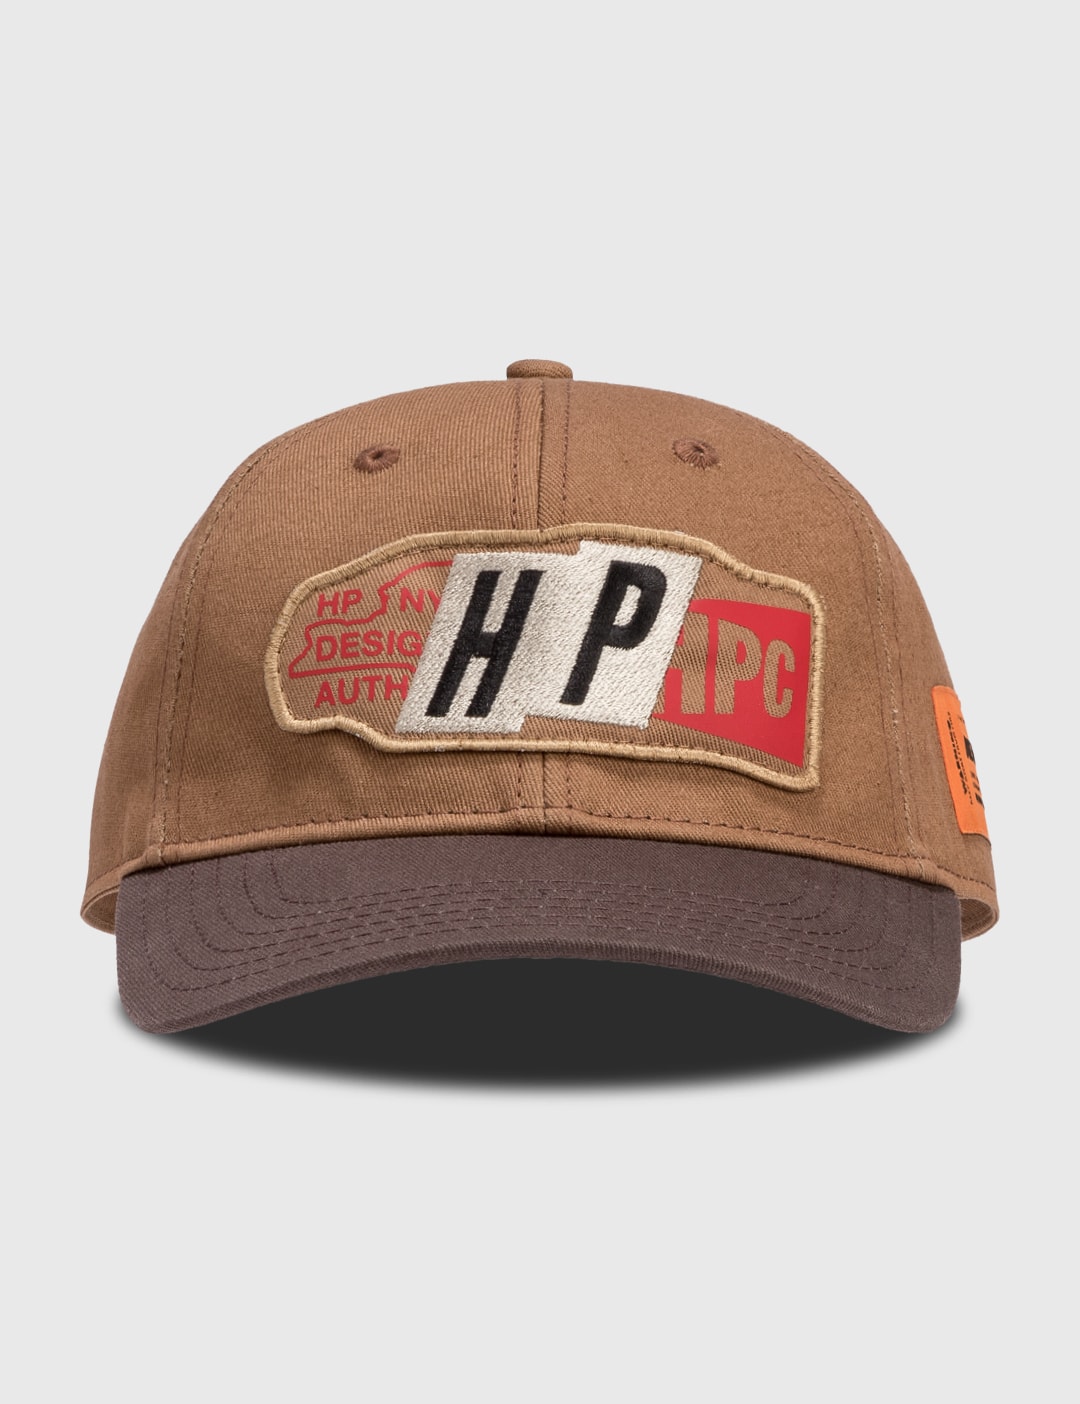 HP Design Authority Cap Placeholder Image